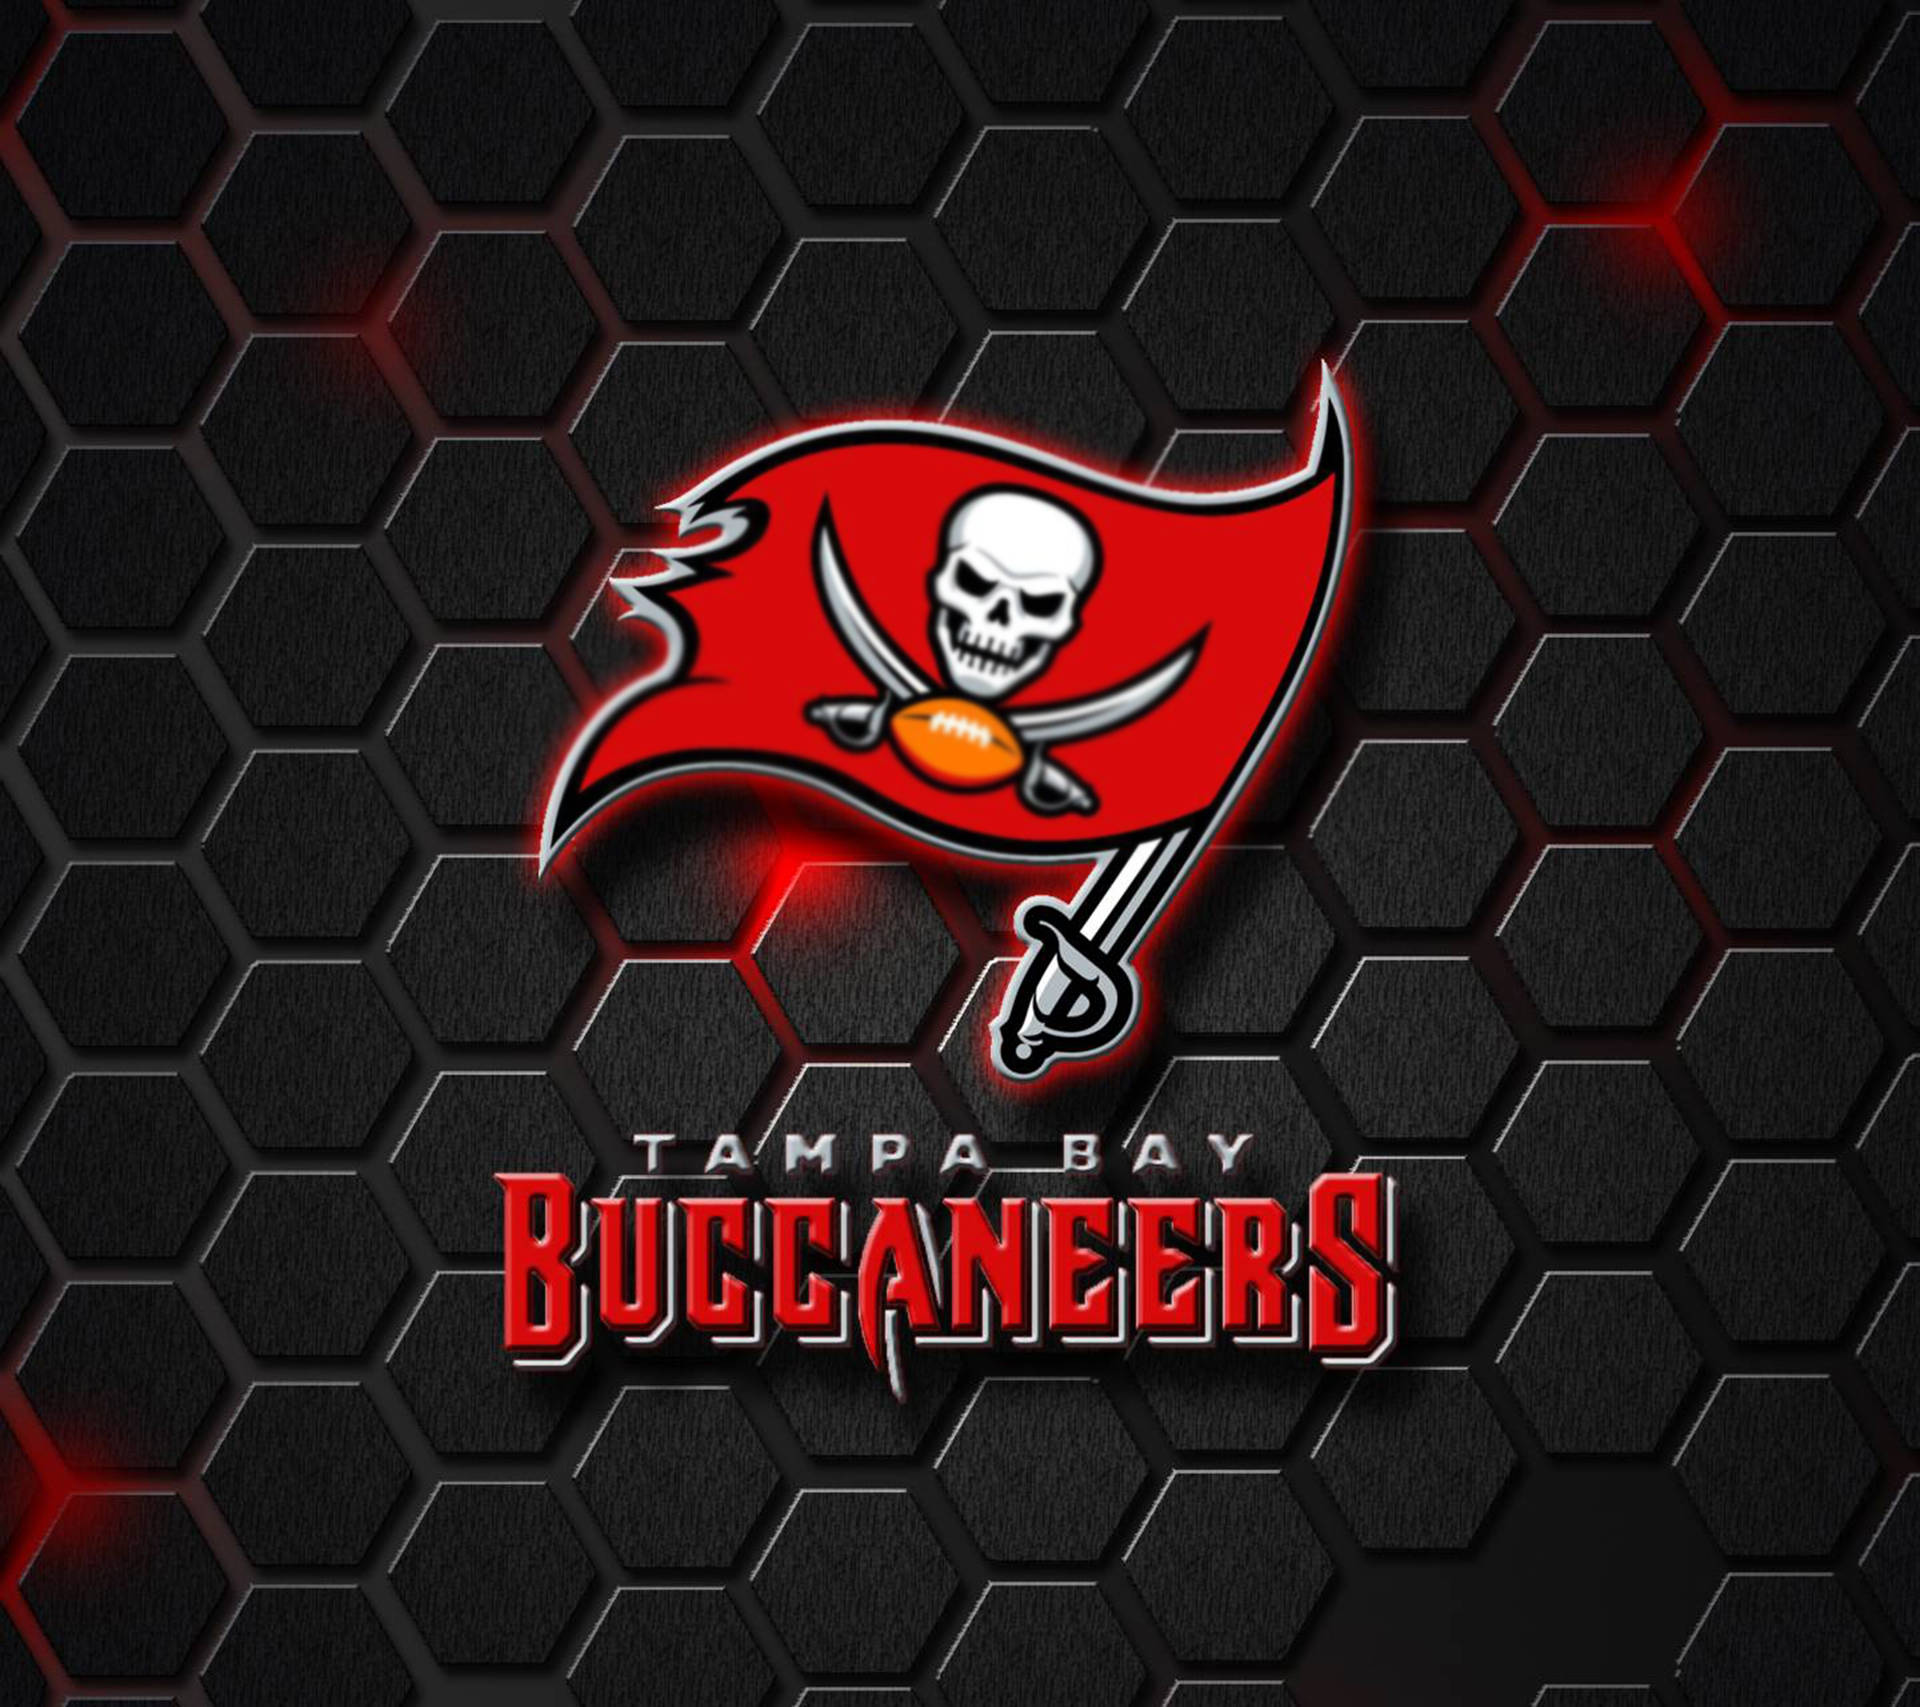 Tampa Bay Buccaneers With Hexagons